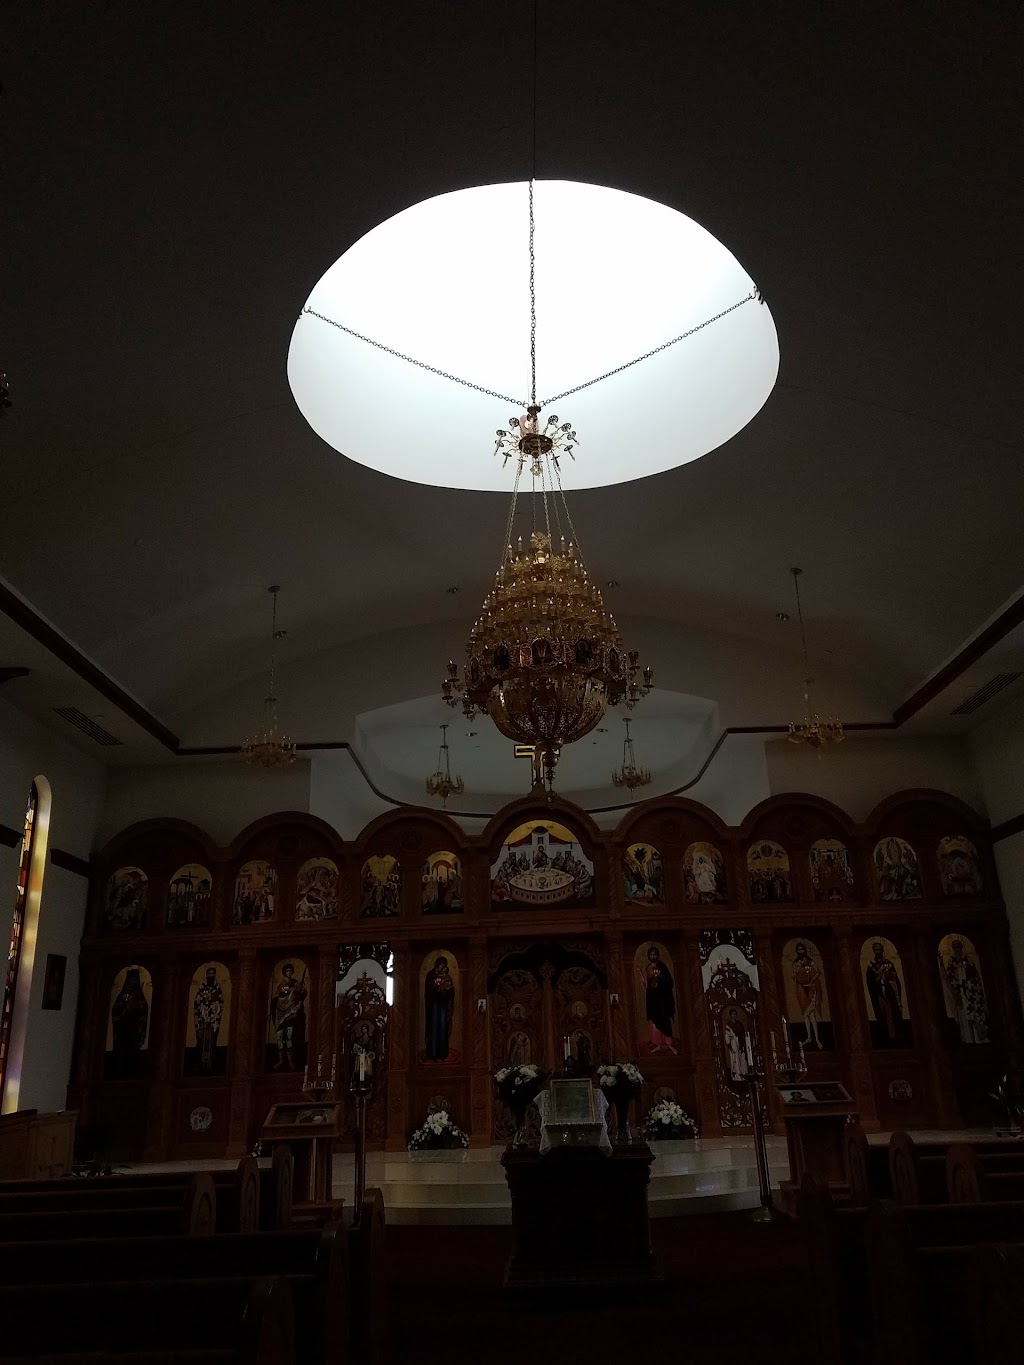 St George Serbian Orthodox Church | 11001 Greenwood St, Lenexa, KS 66215, USA | Phone: (913) 469-9200